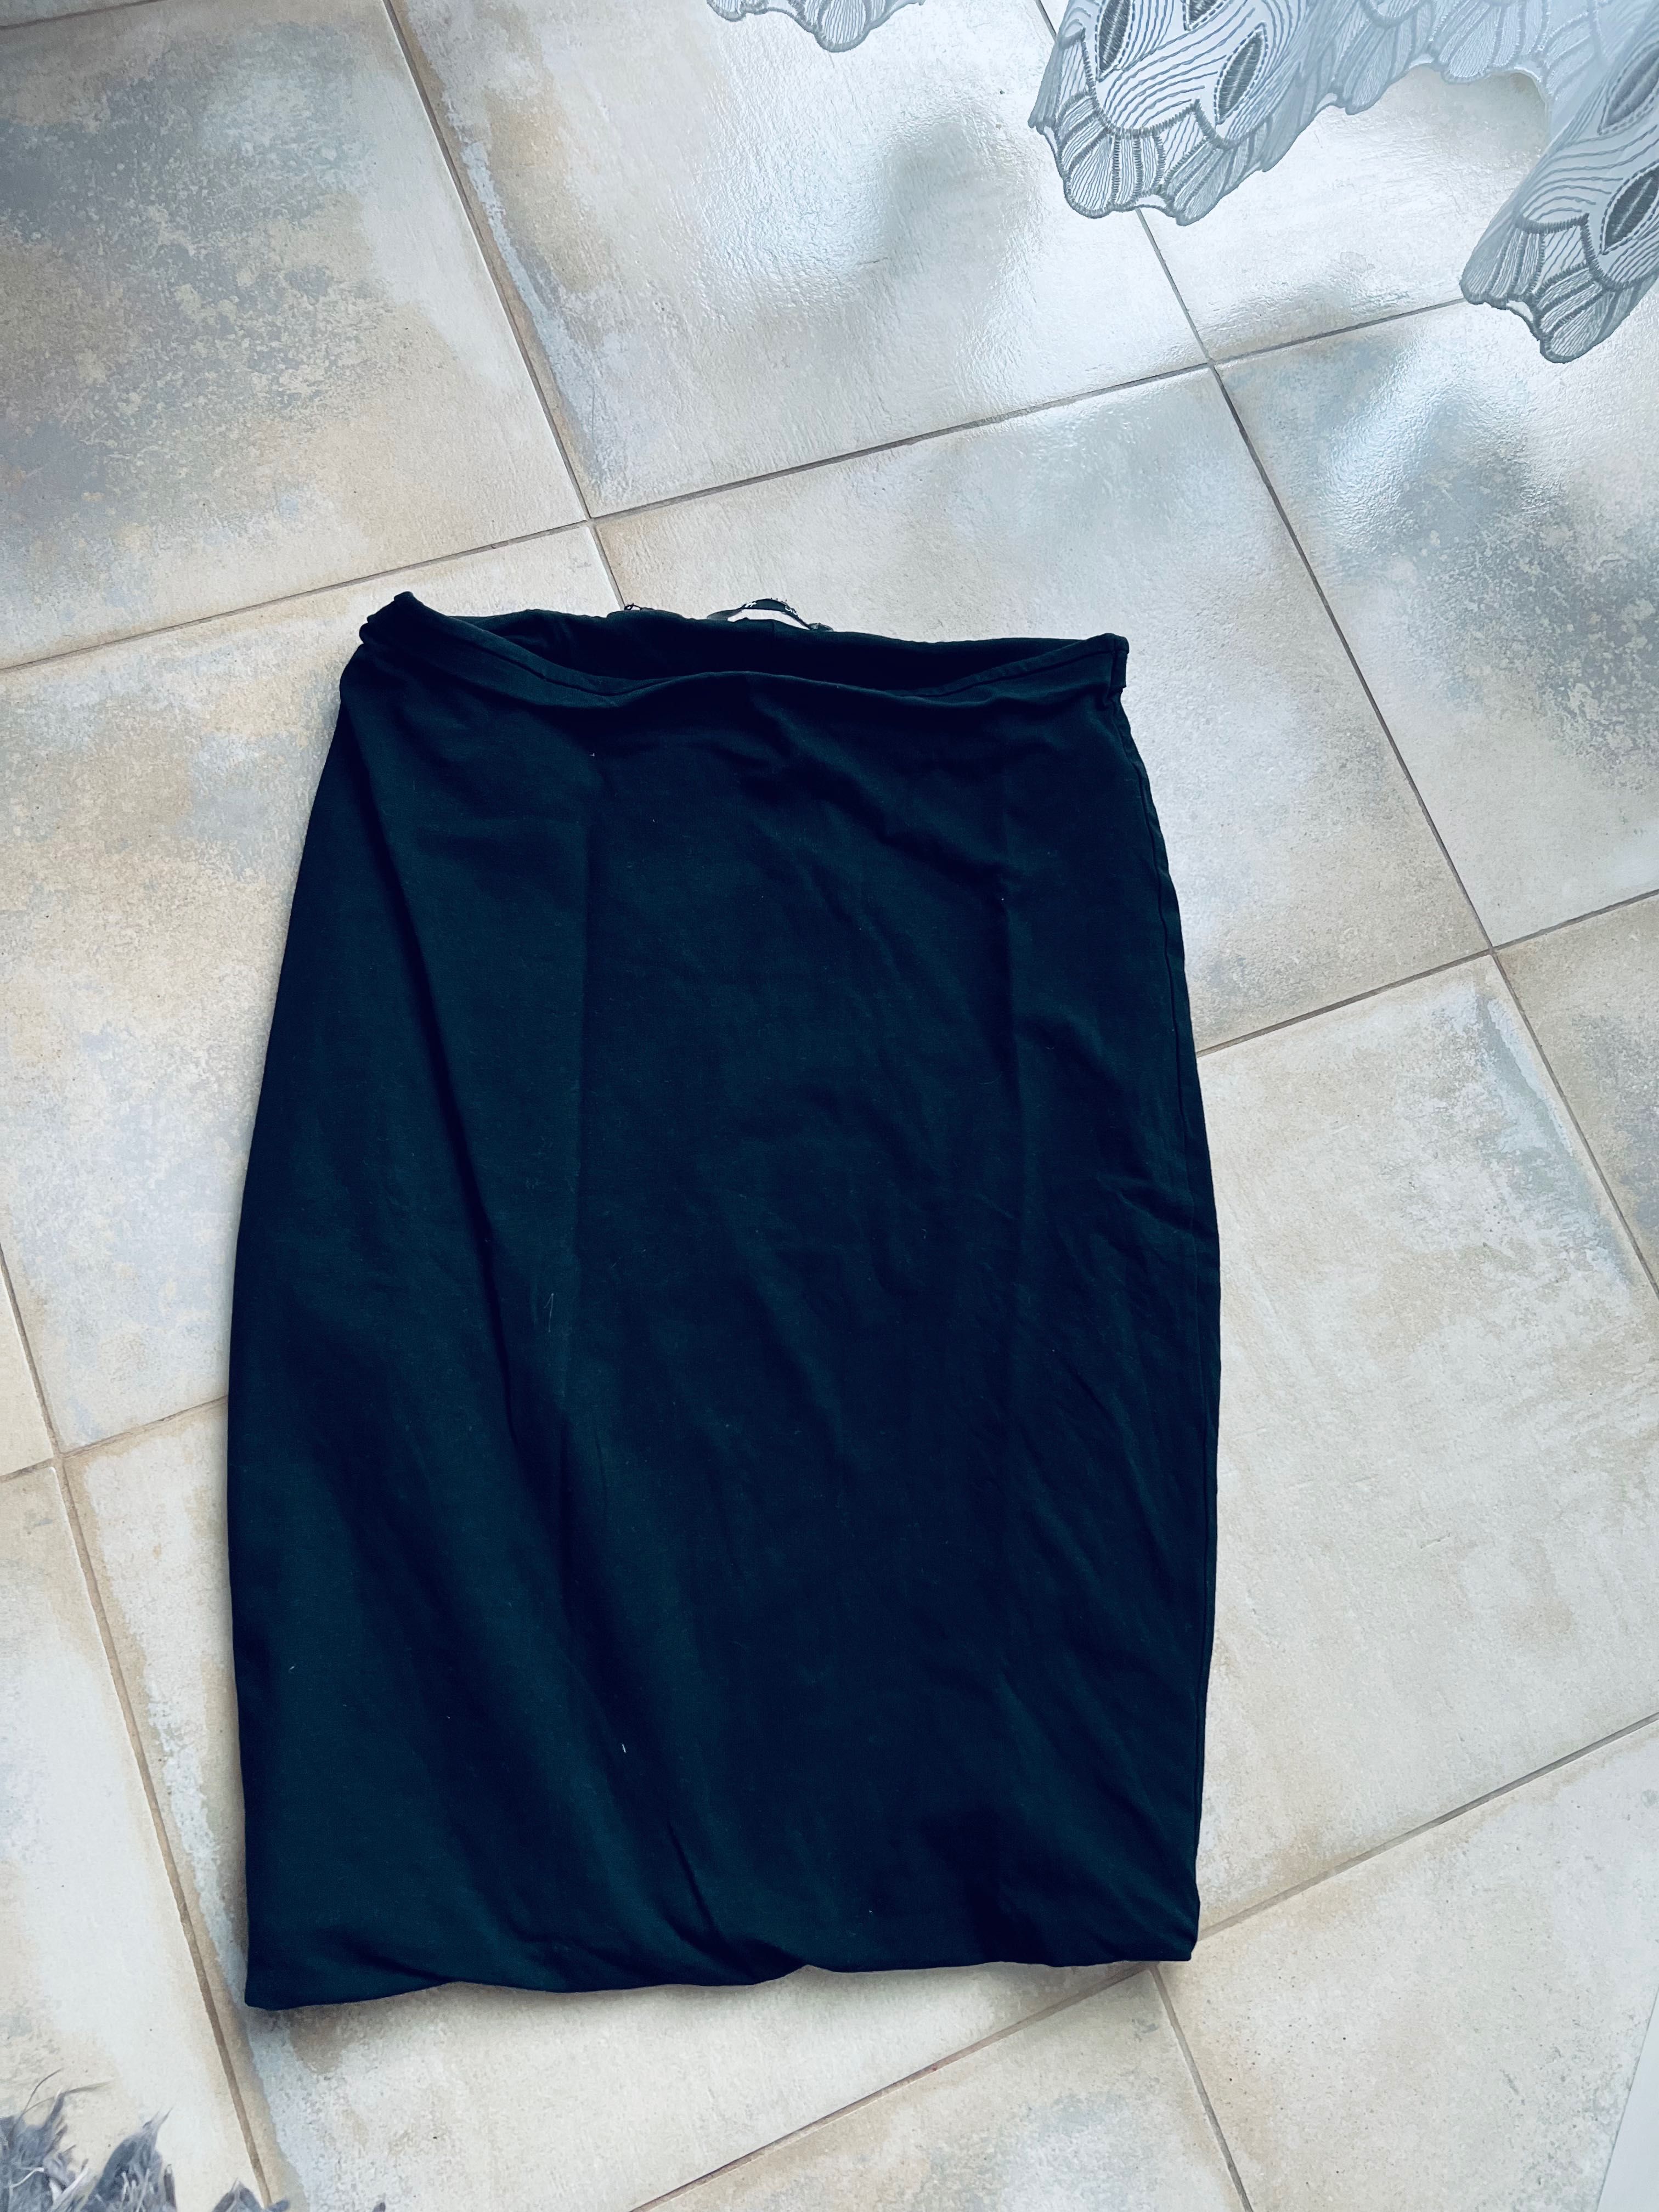 Spódnica 36/S czarna H&M basic bez wad